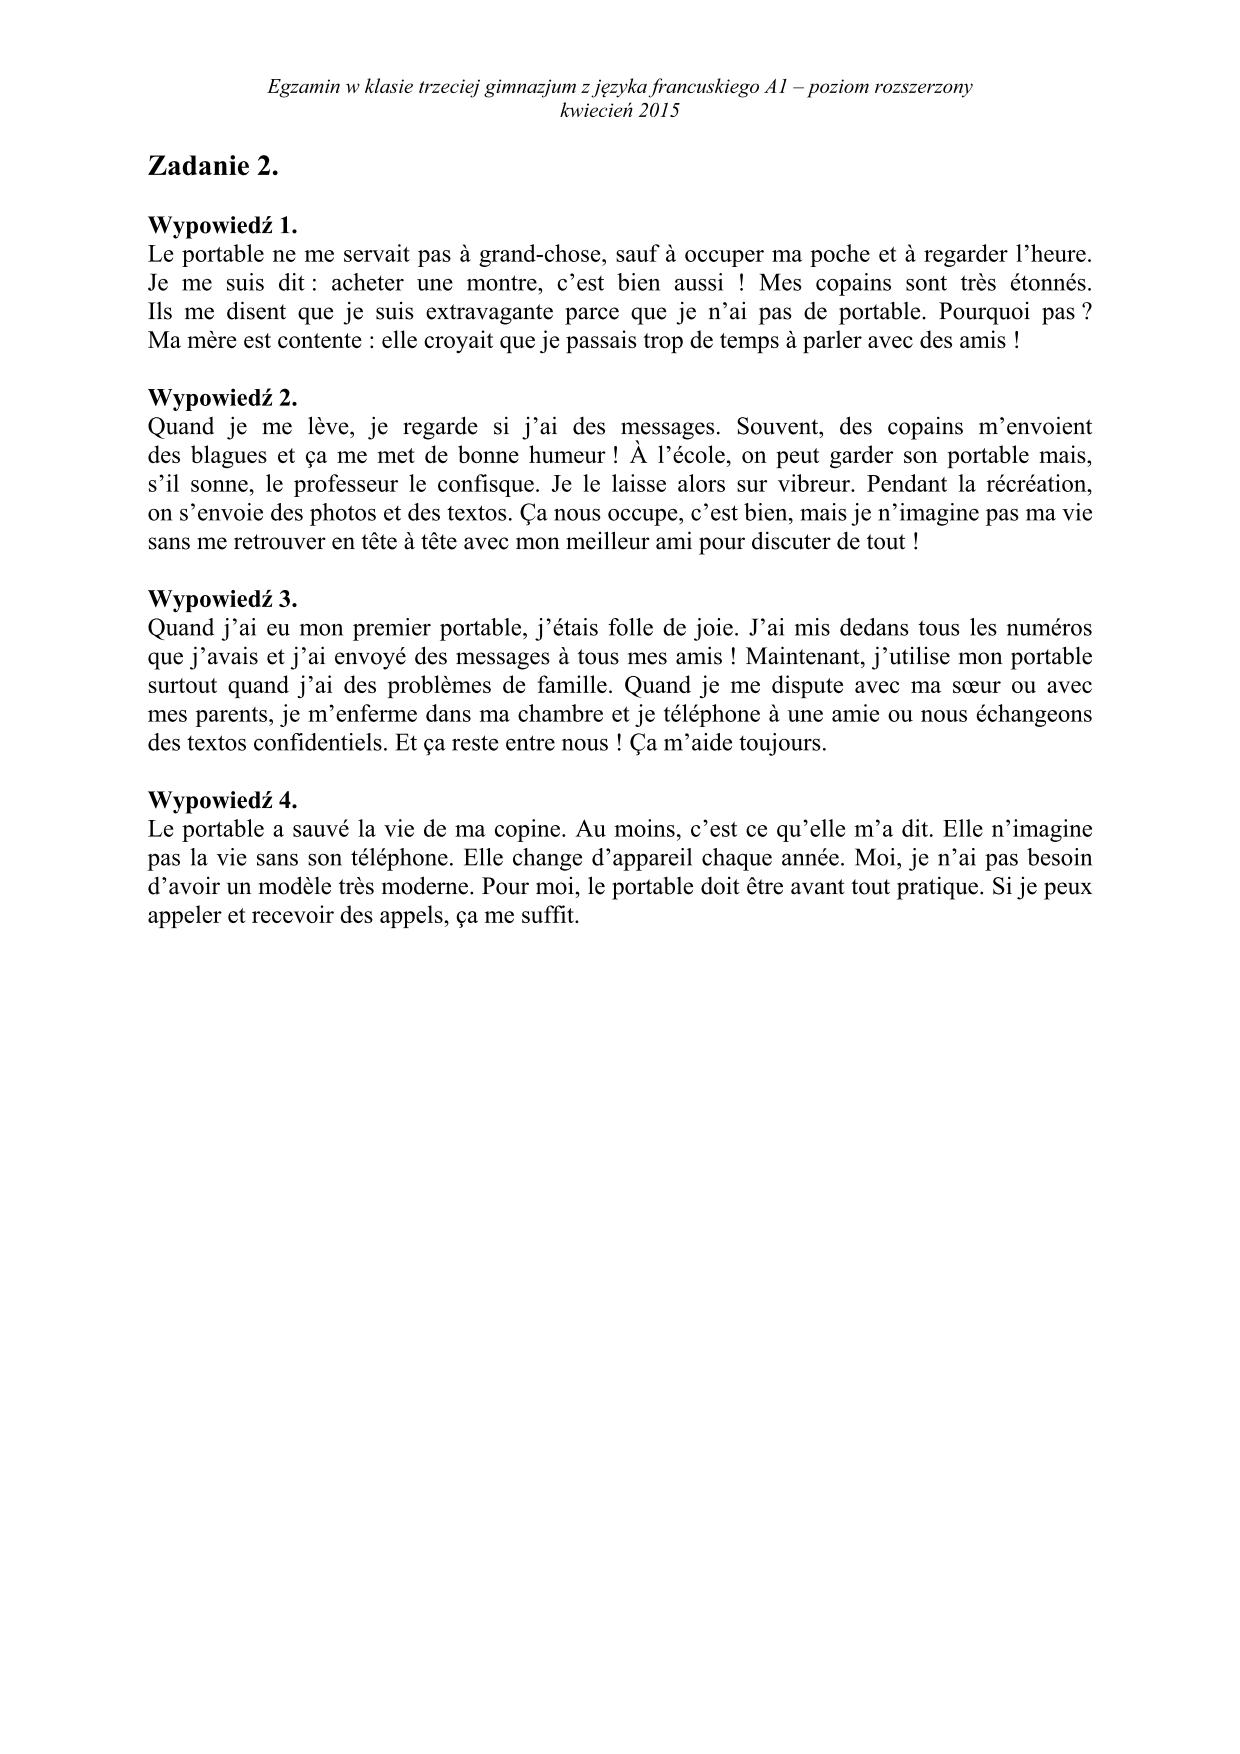 transkrypcja-francuski-poziom-rozszerzony-egzamin-gimnazjalny-2015-2